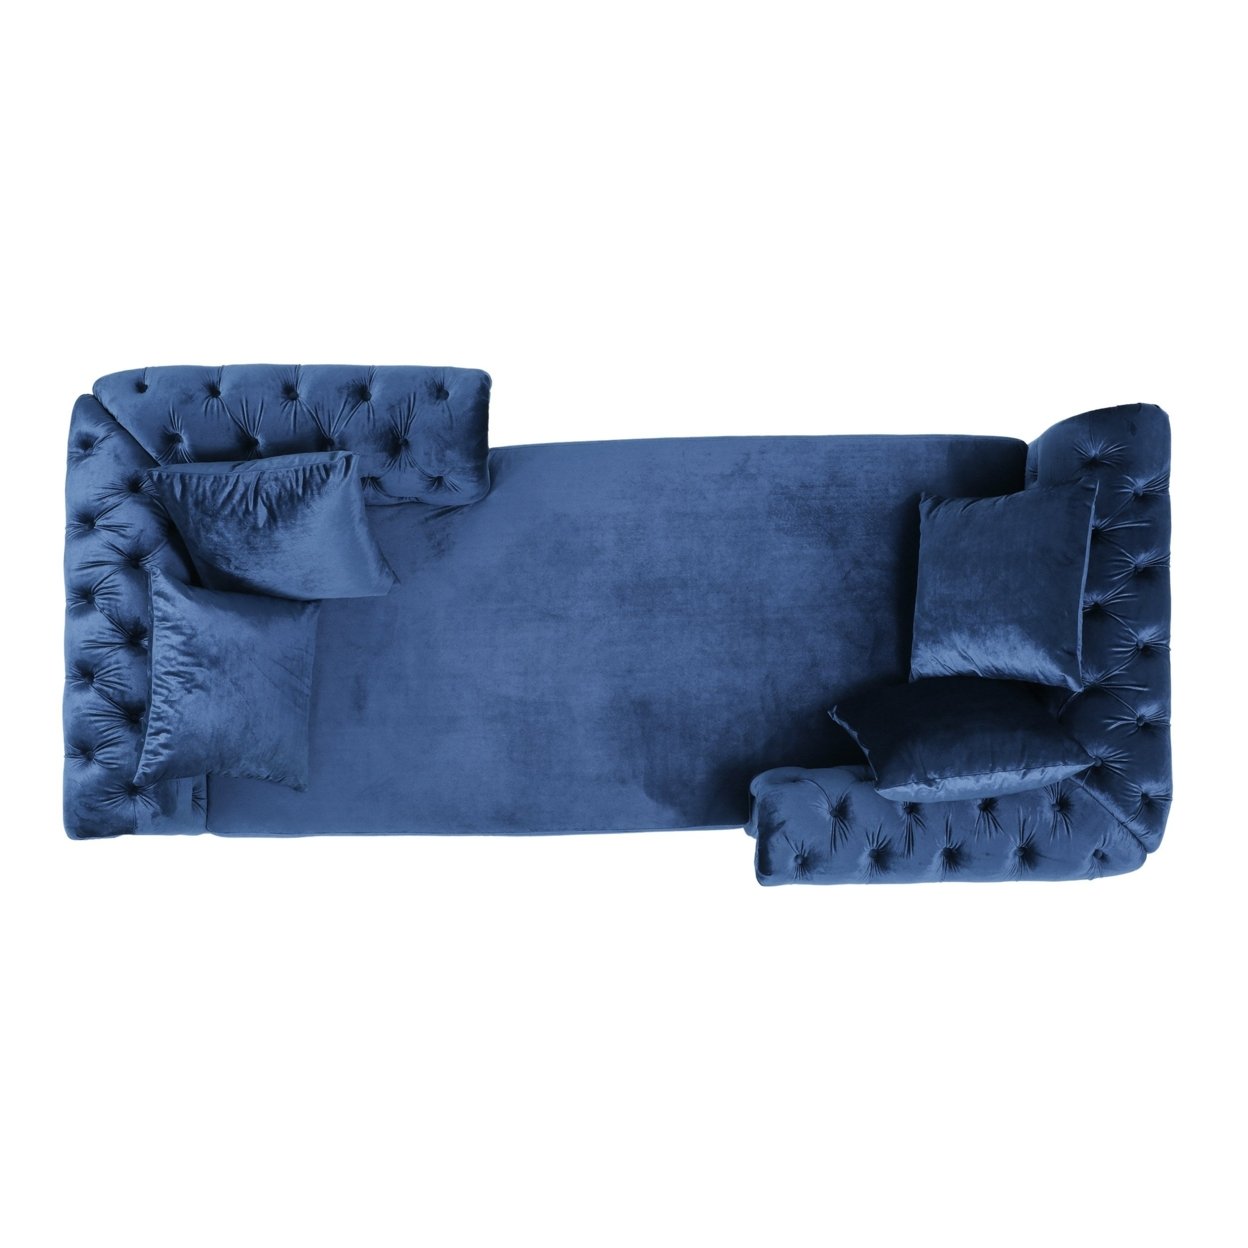 Harrisville Modern Glam Tufted Velvet Tete-a-Tete Chaise Lounge With Accent Pillows - Dark Brown/navy Blue